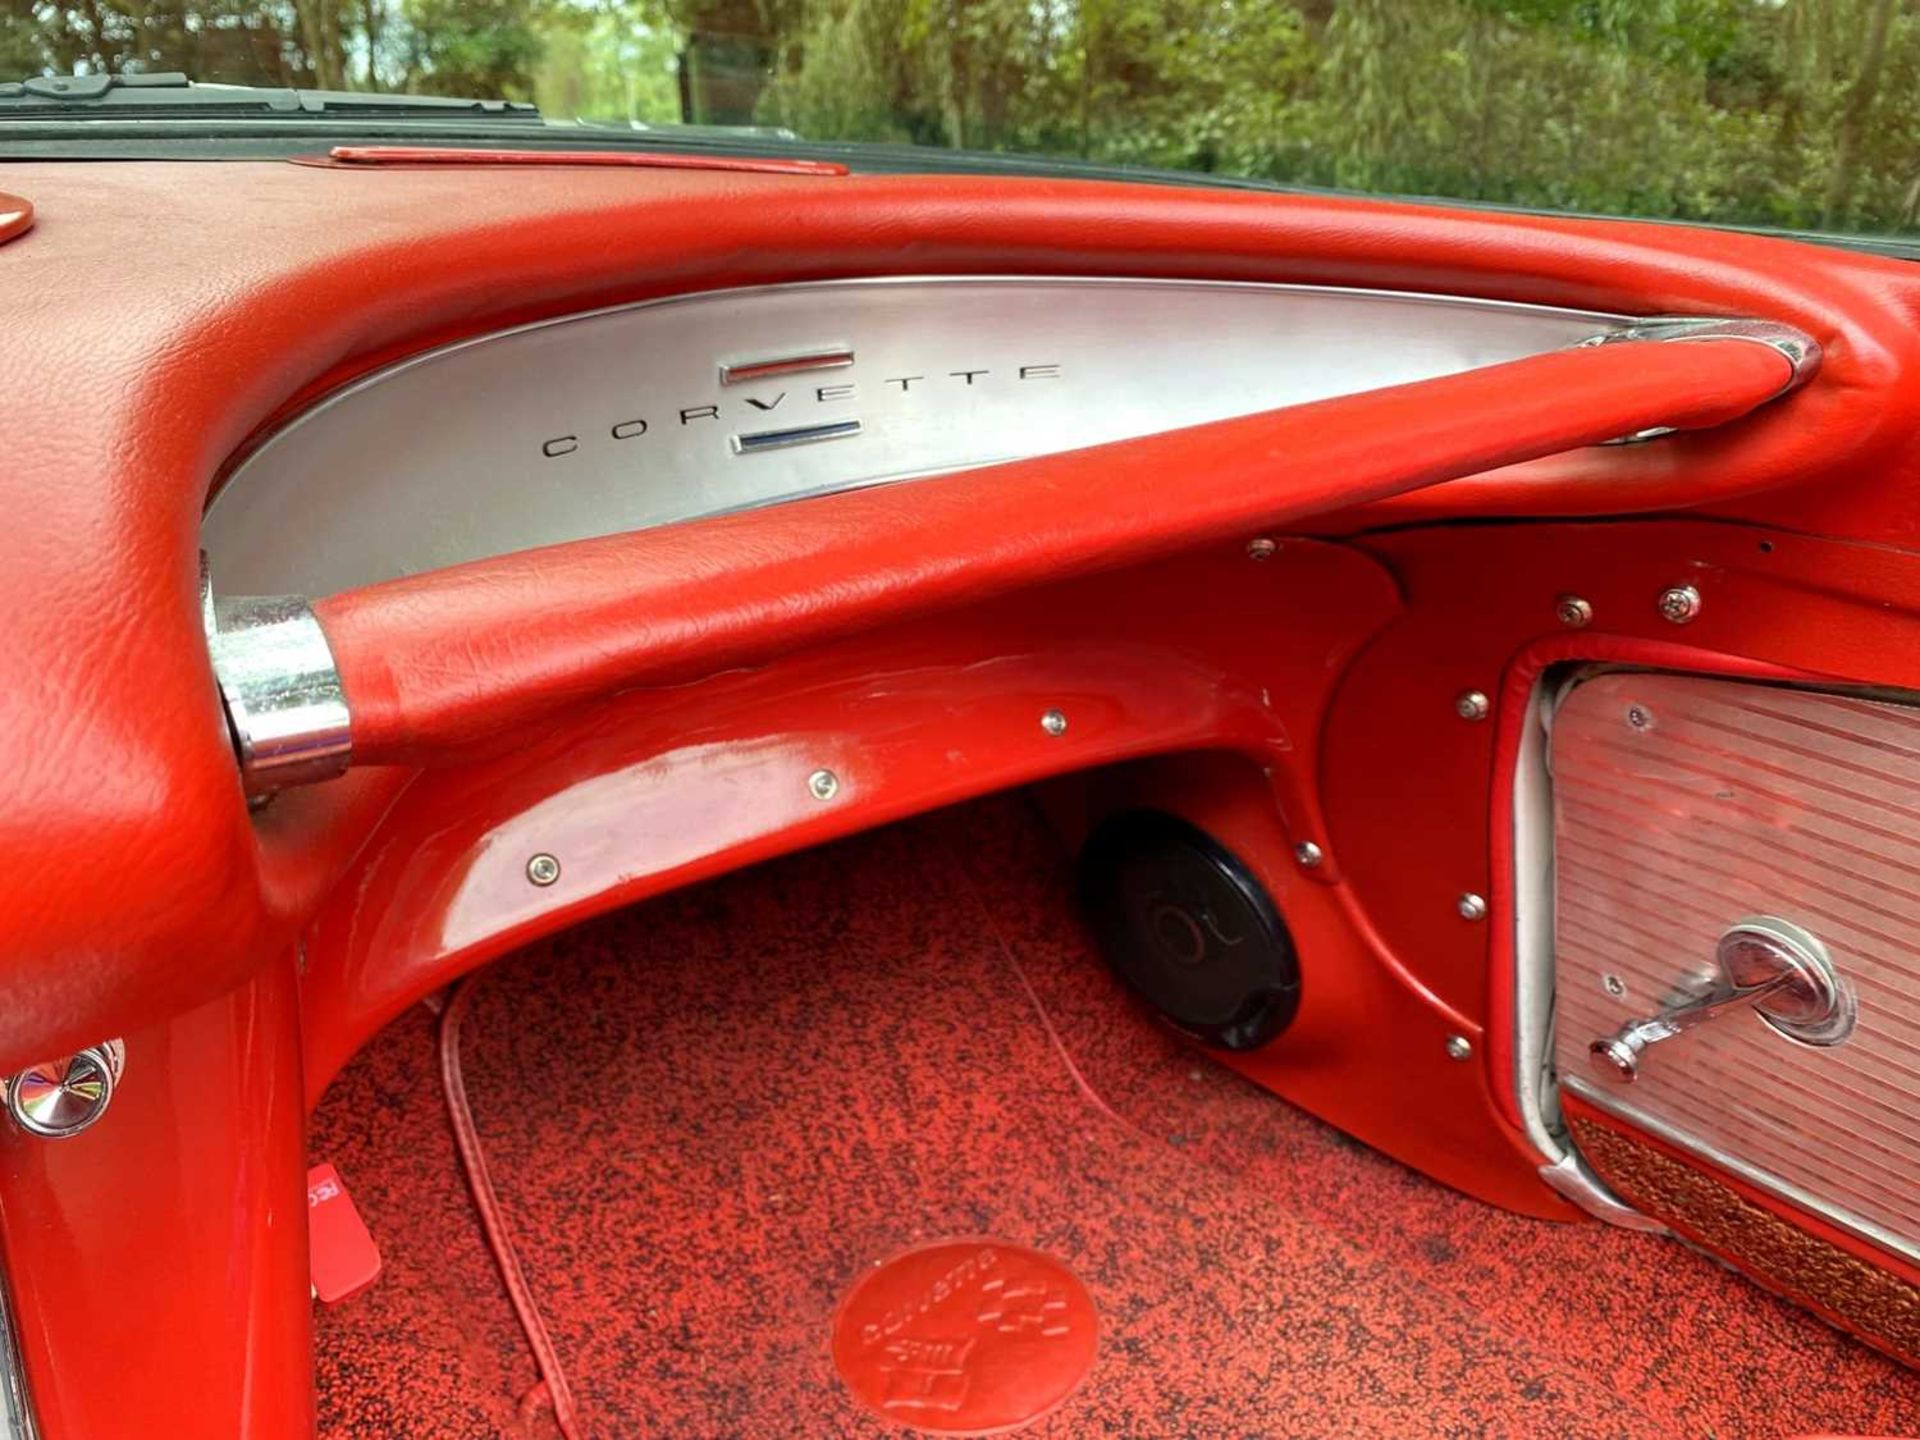 1961 Chevrolet Corvette Engine upgraded to a 5.4L V8 - Image 72 of 95